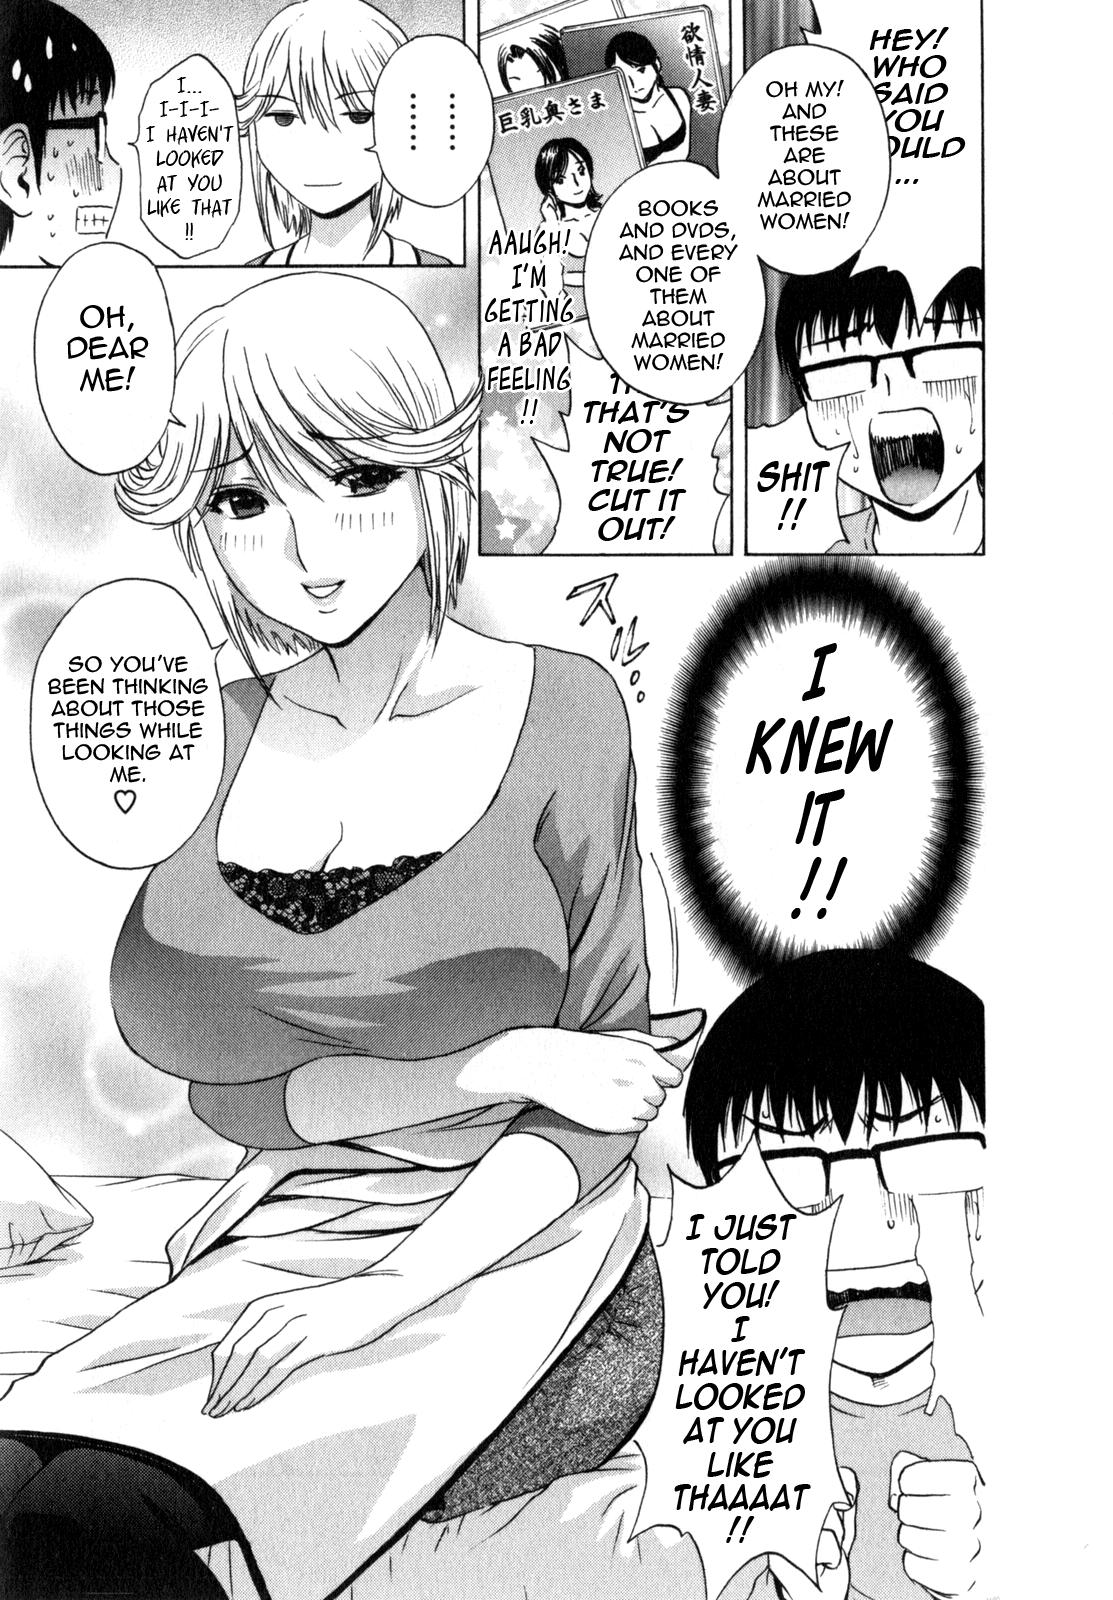 [Hidemaru] Life with Married Women Just Like a Manga 1 - Ch. 1-4 [English] {Tadanohito} 30